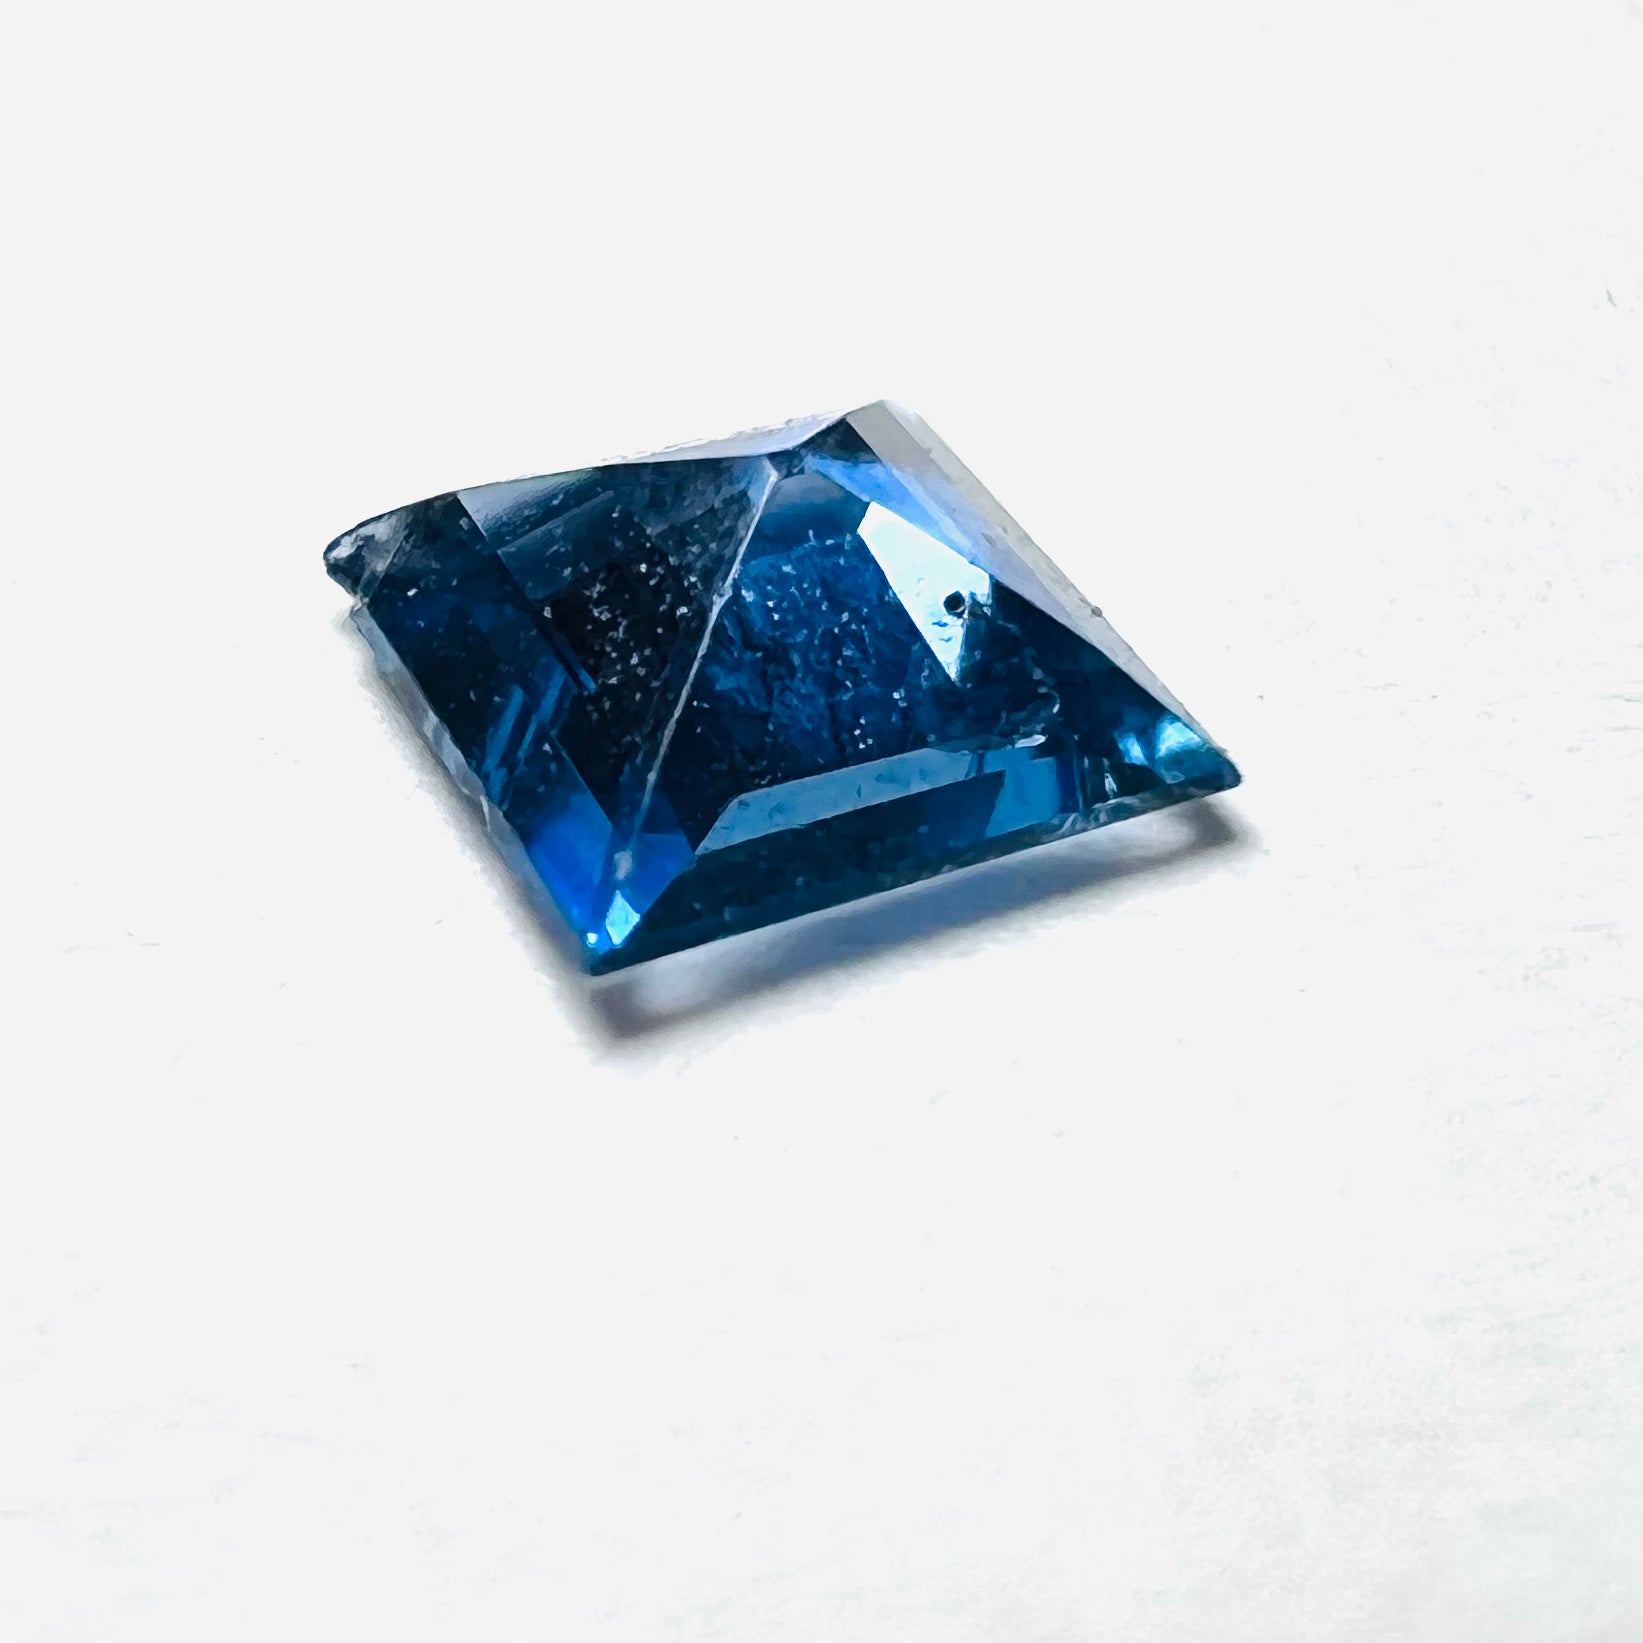 .40CT Loose Blue Emerald Cut Sapphire 4x2mm Earth mined Gemstone